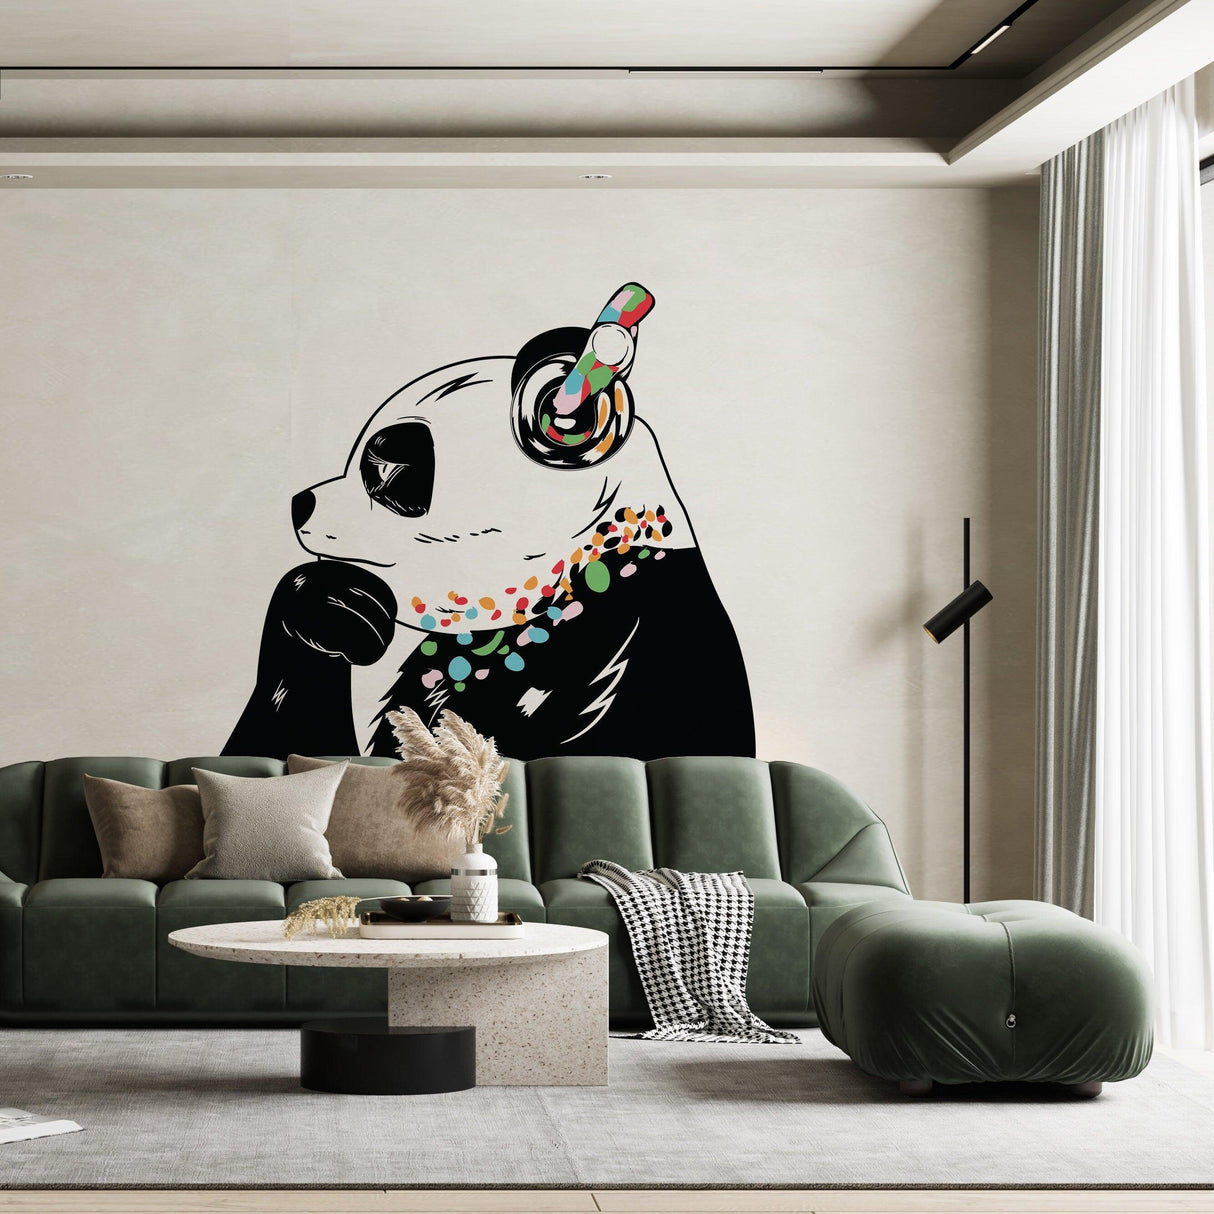 Thinking Panda Sticker - Inspired by Banksy Art Vinyl Dj Baksy Wall Decal - Headphones Pandas Bear Music Thinker Street Graffiti Smart Mural - Decords